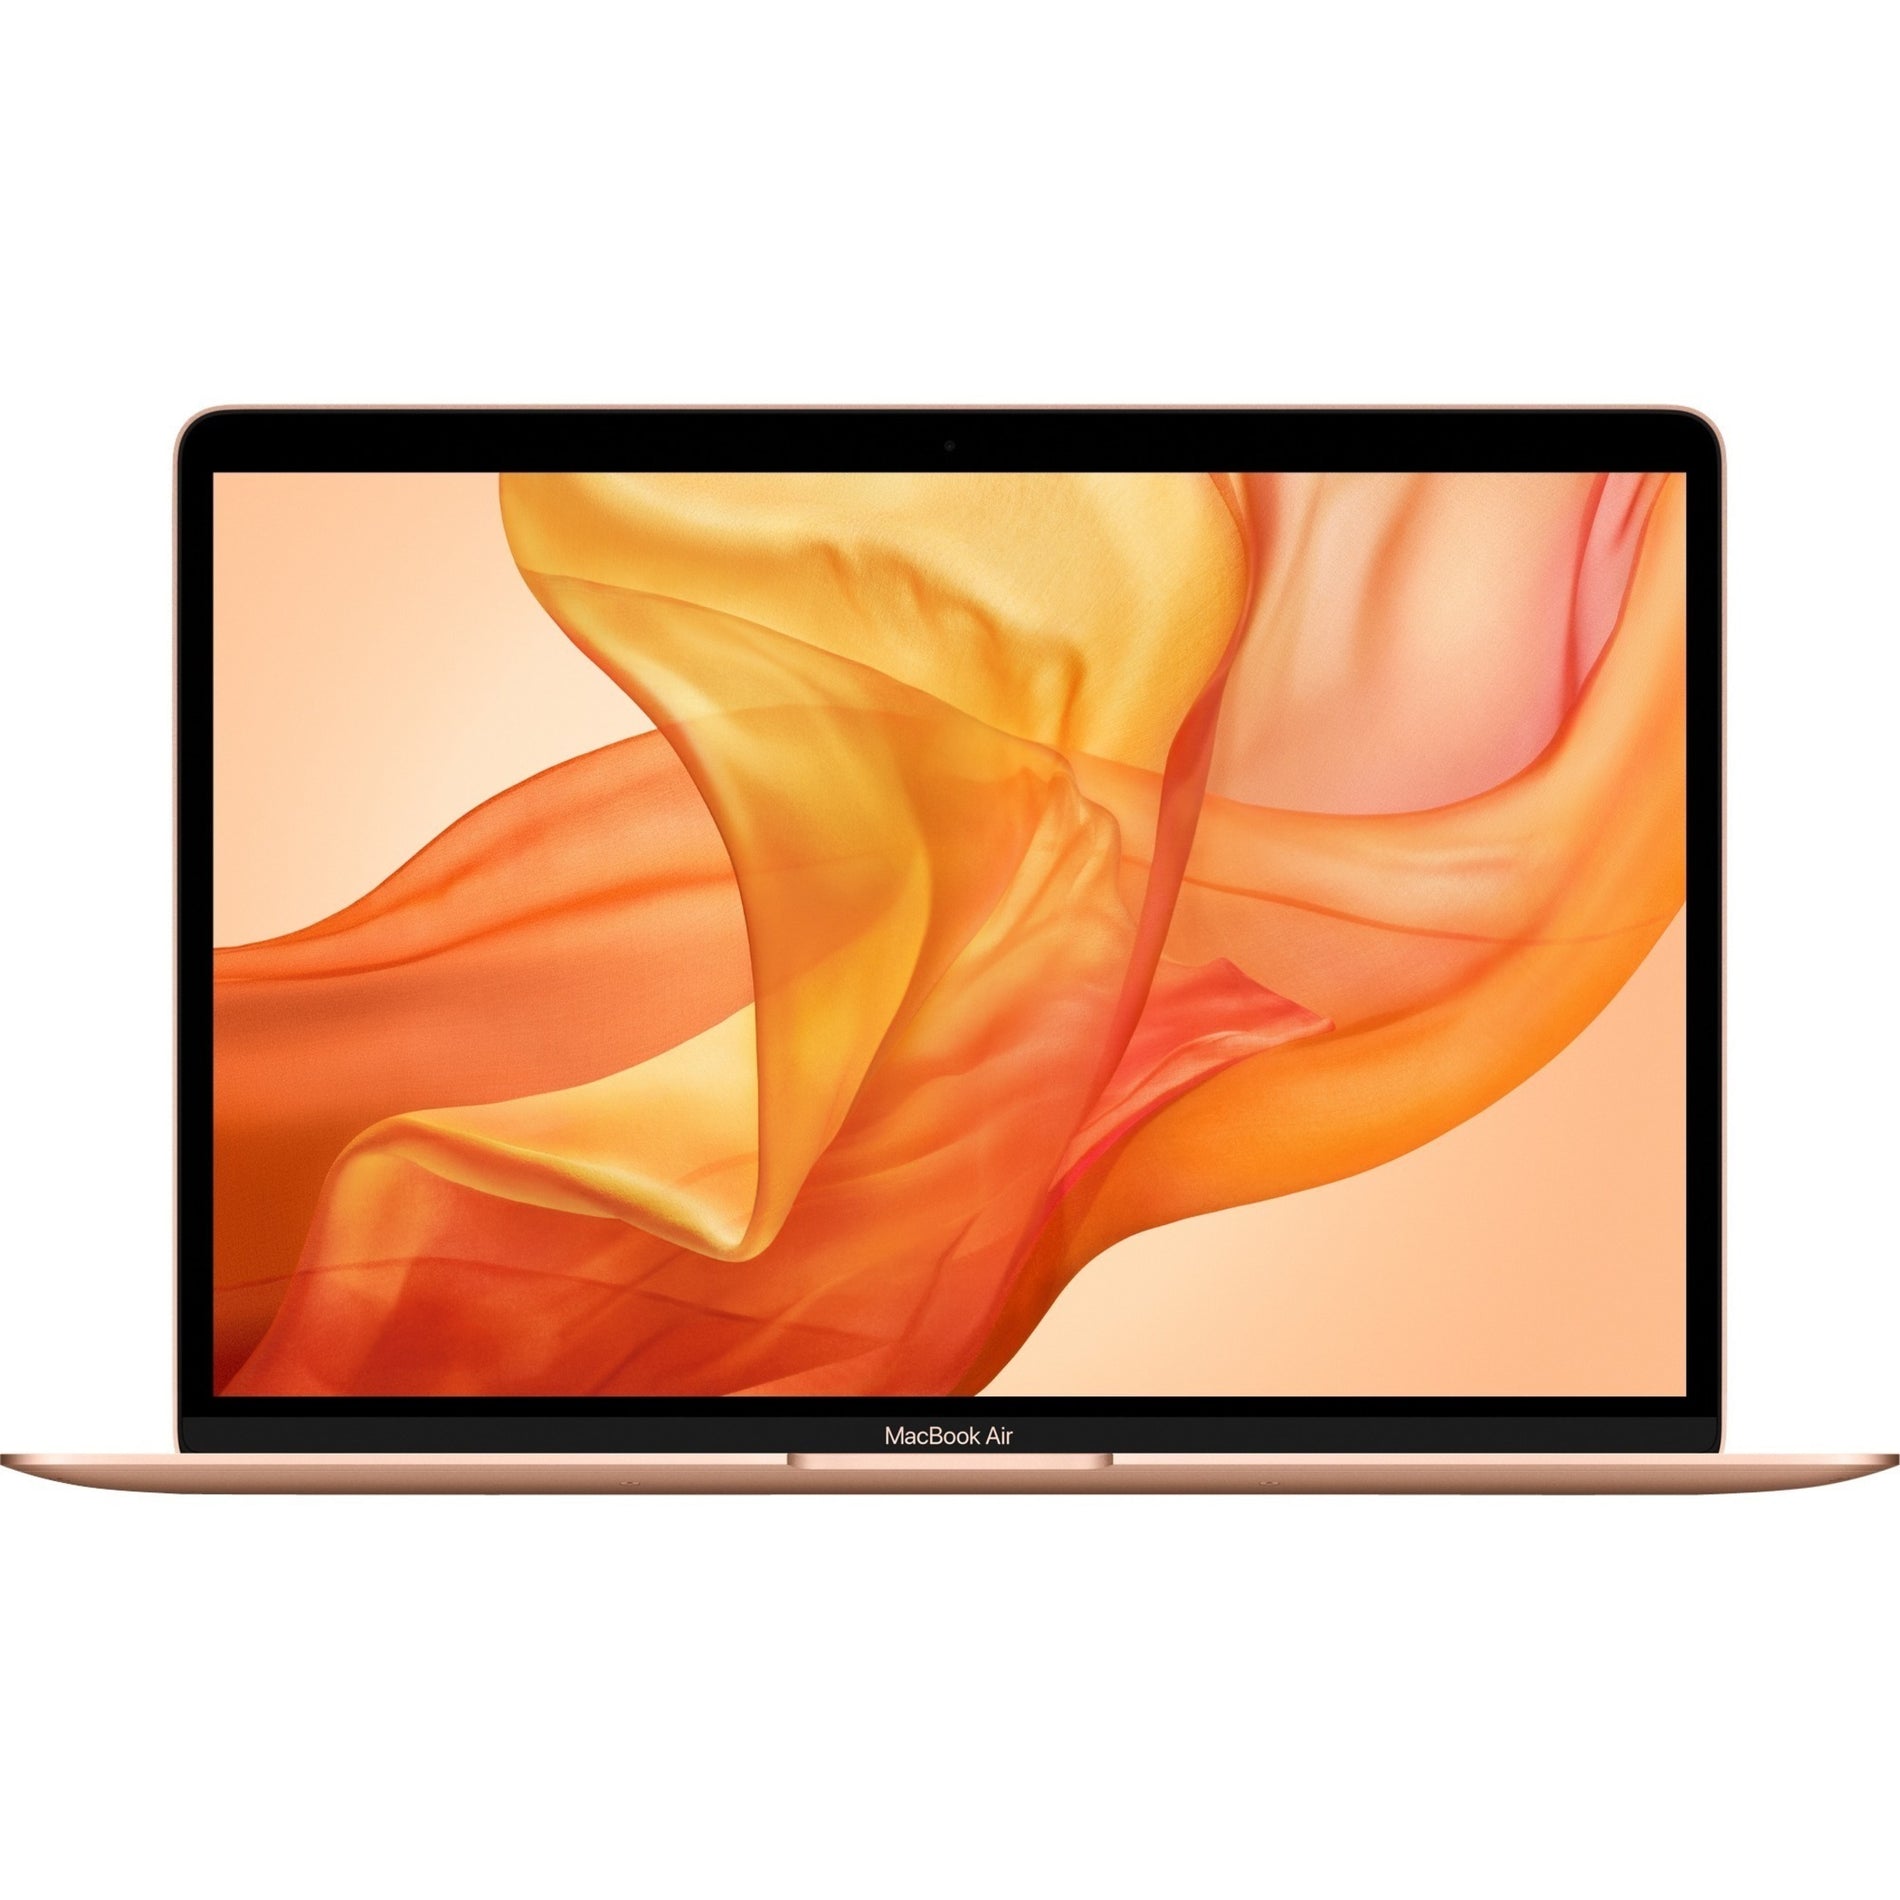 Apple MVFN2LL/A MacBook Air 13.3" Gold, Intel Core i5, 8GB RAM, 256GB SSD, macOS Mojave